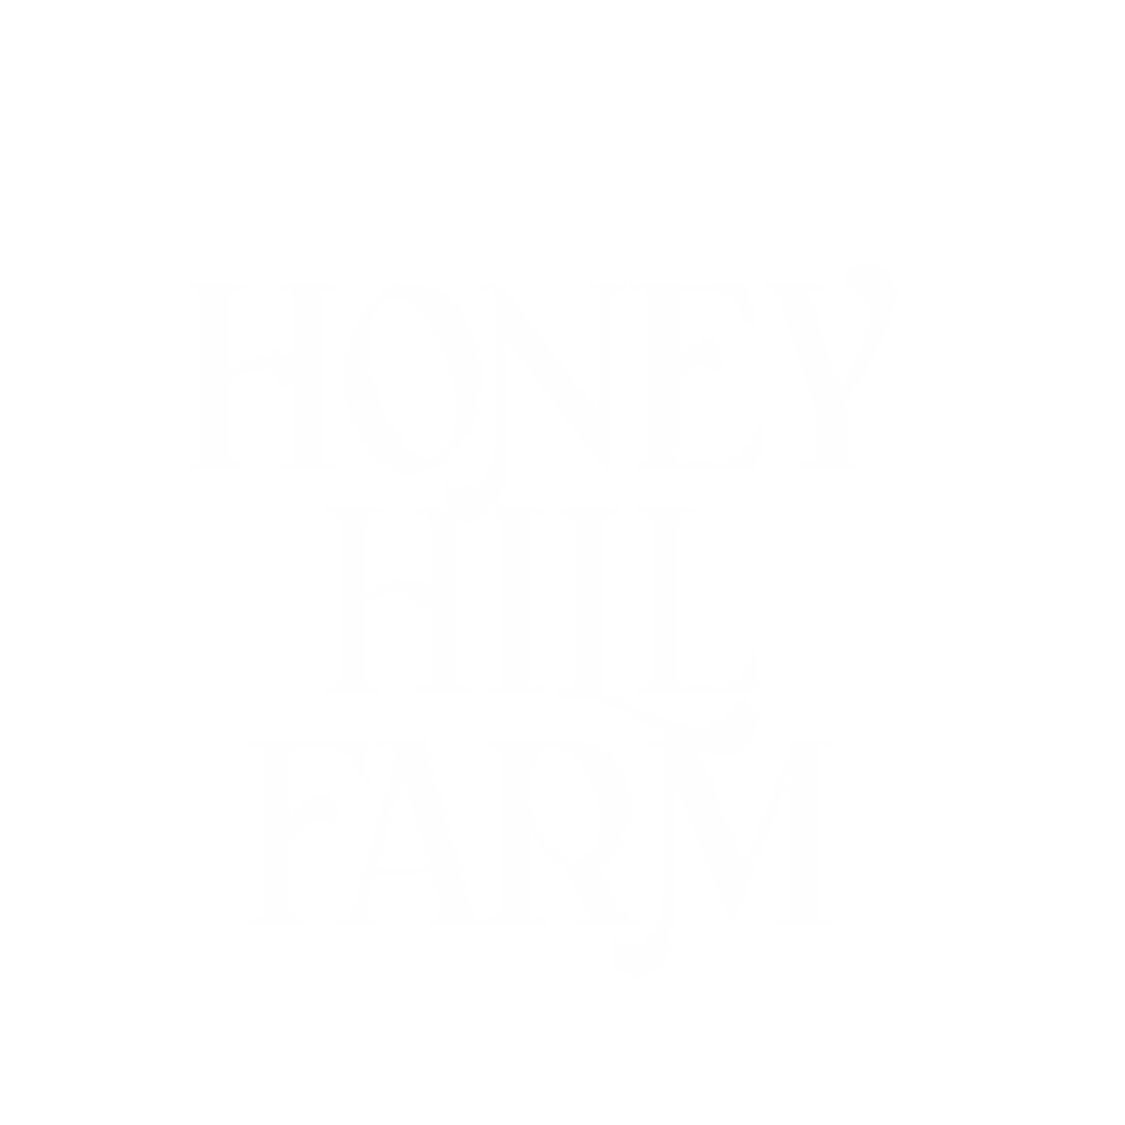 honey hill farm logo